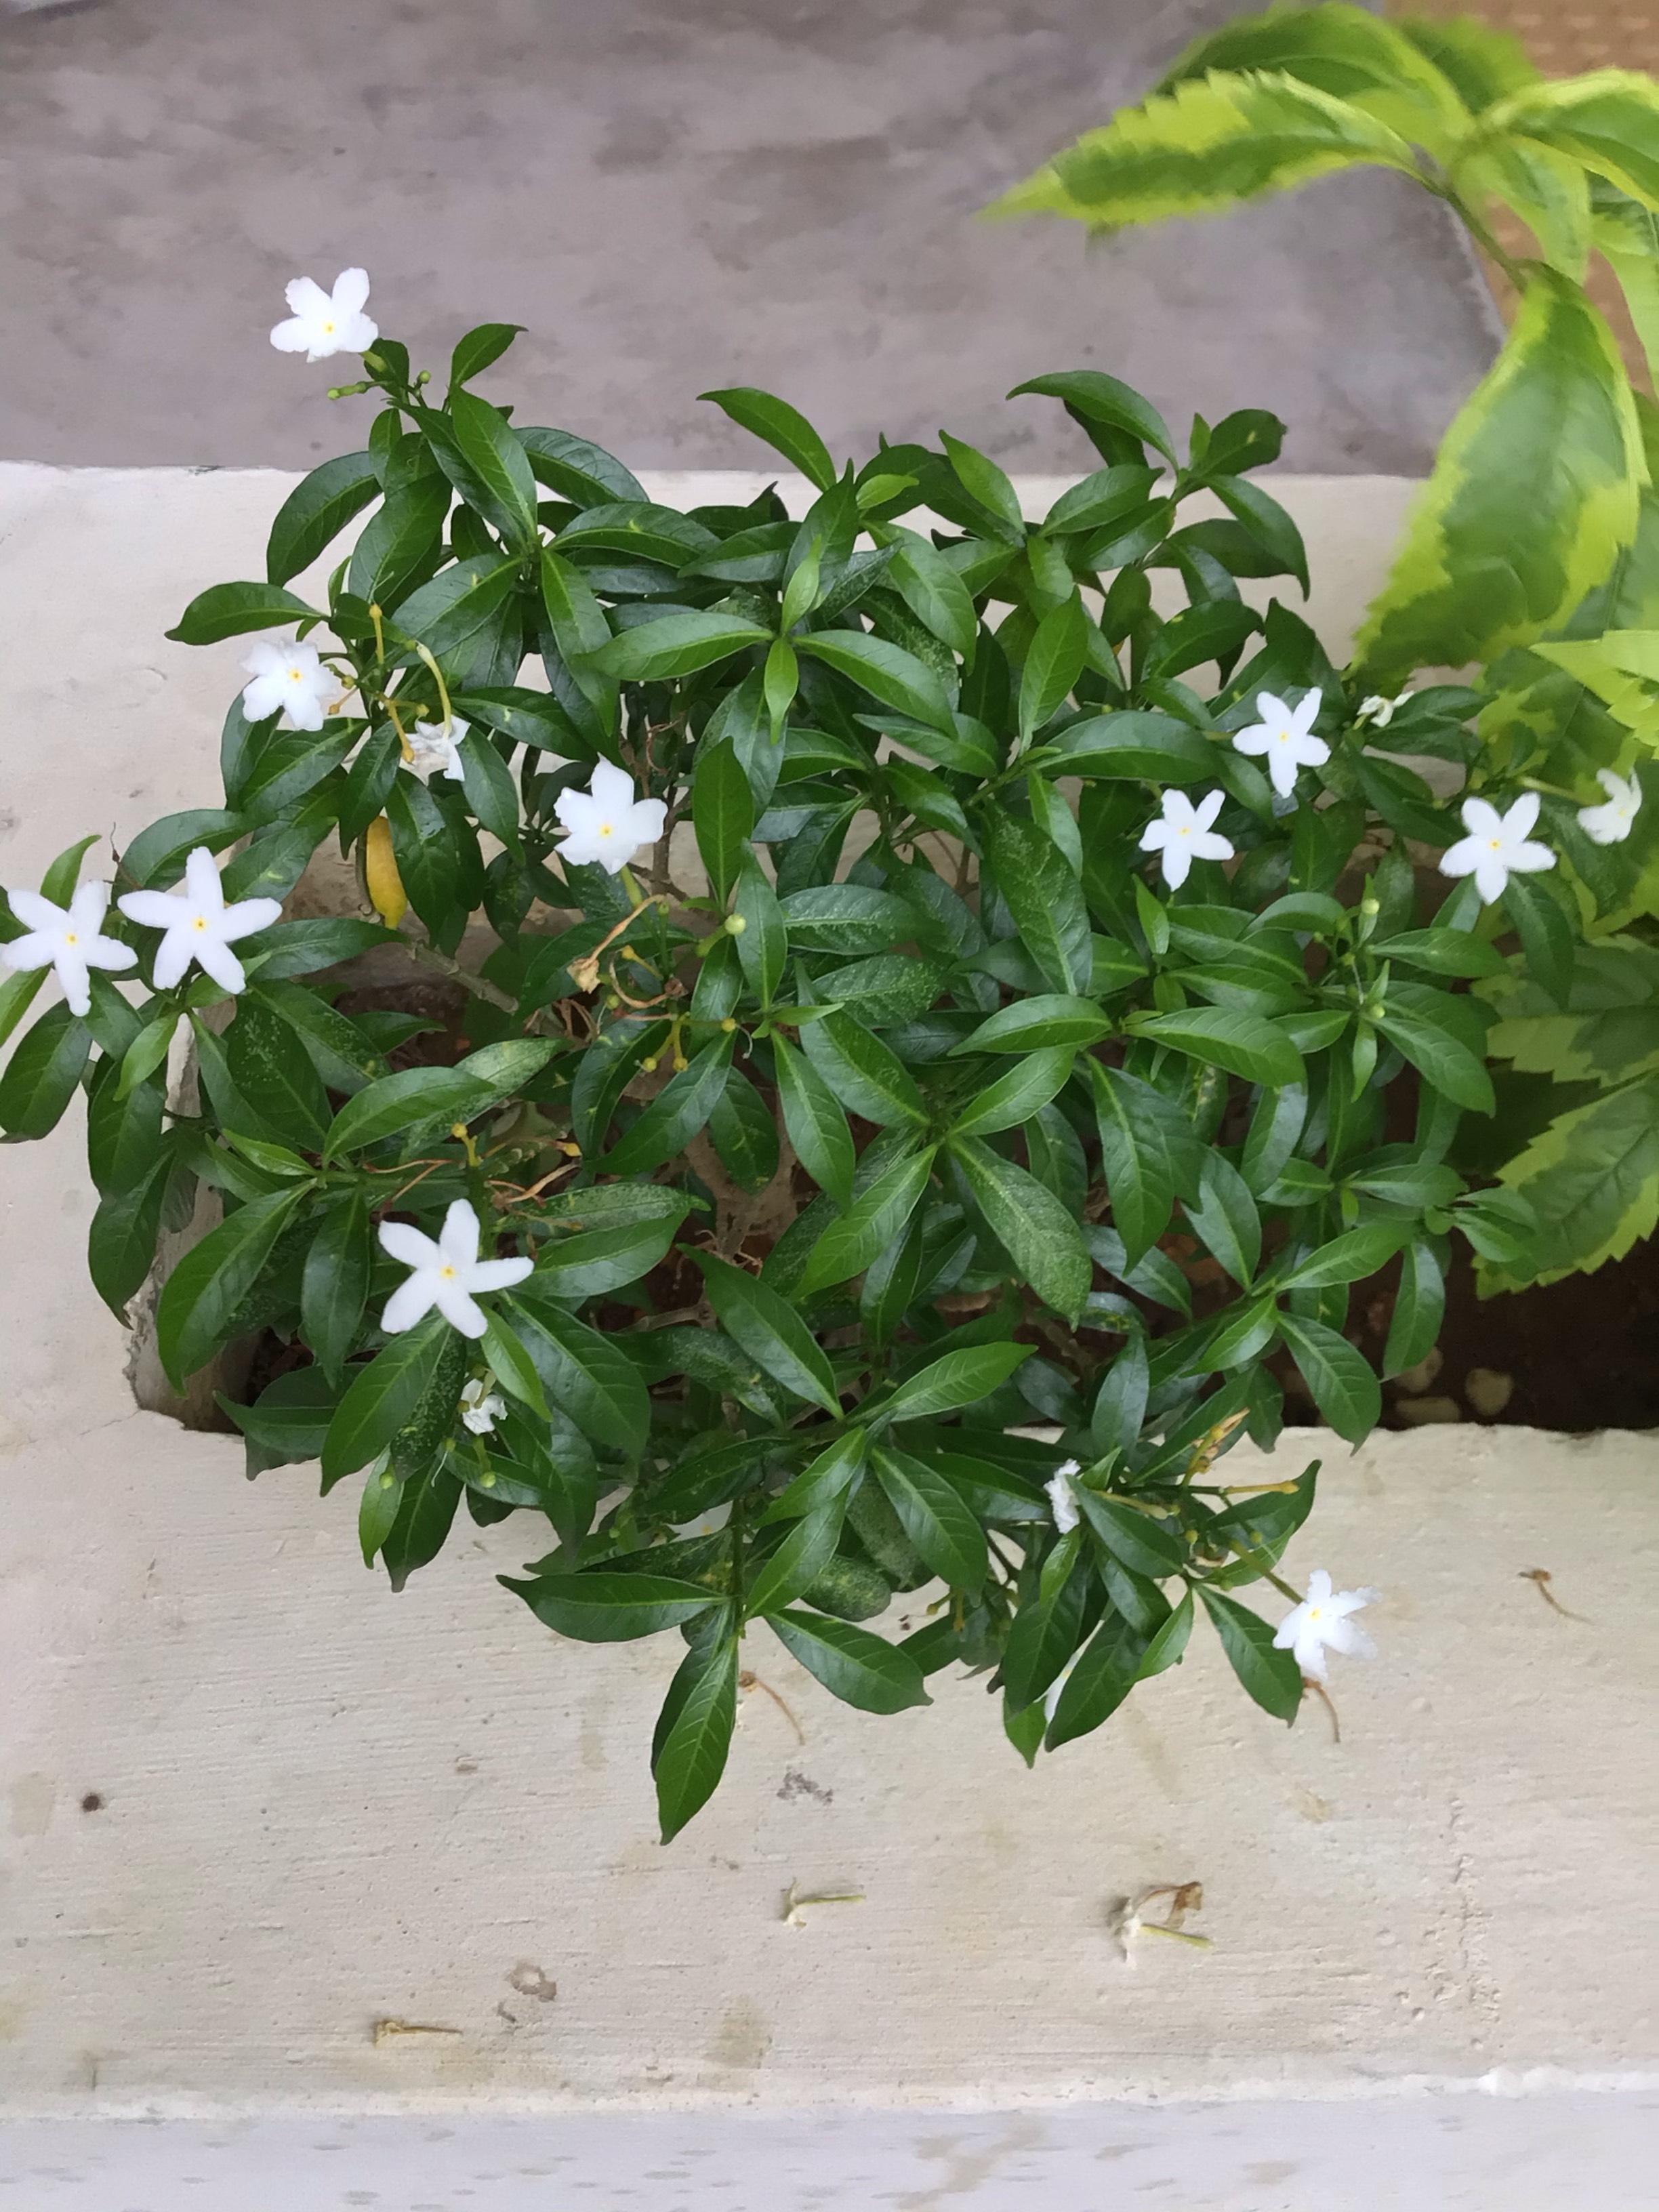 Jasmine plant?